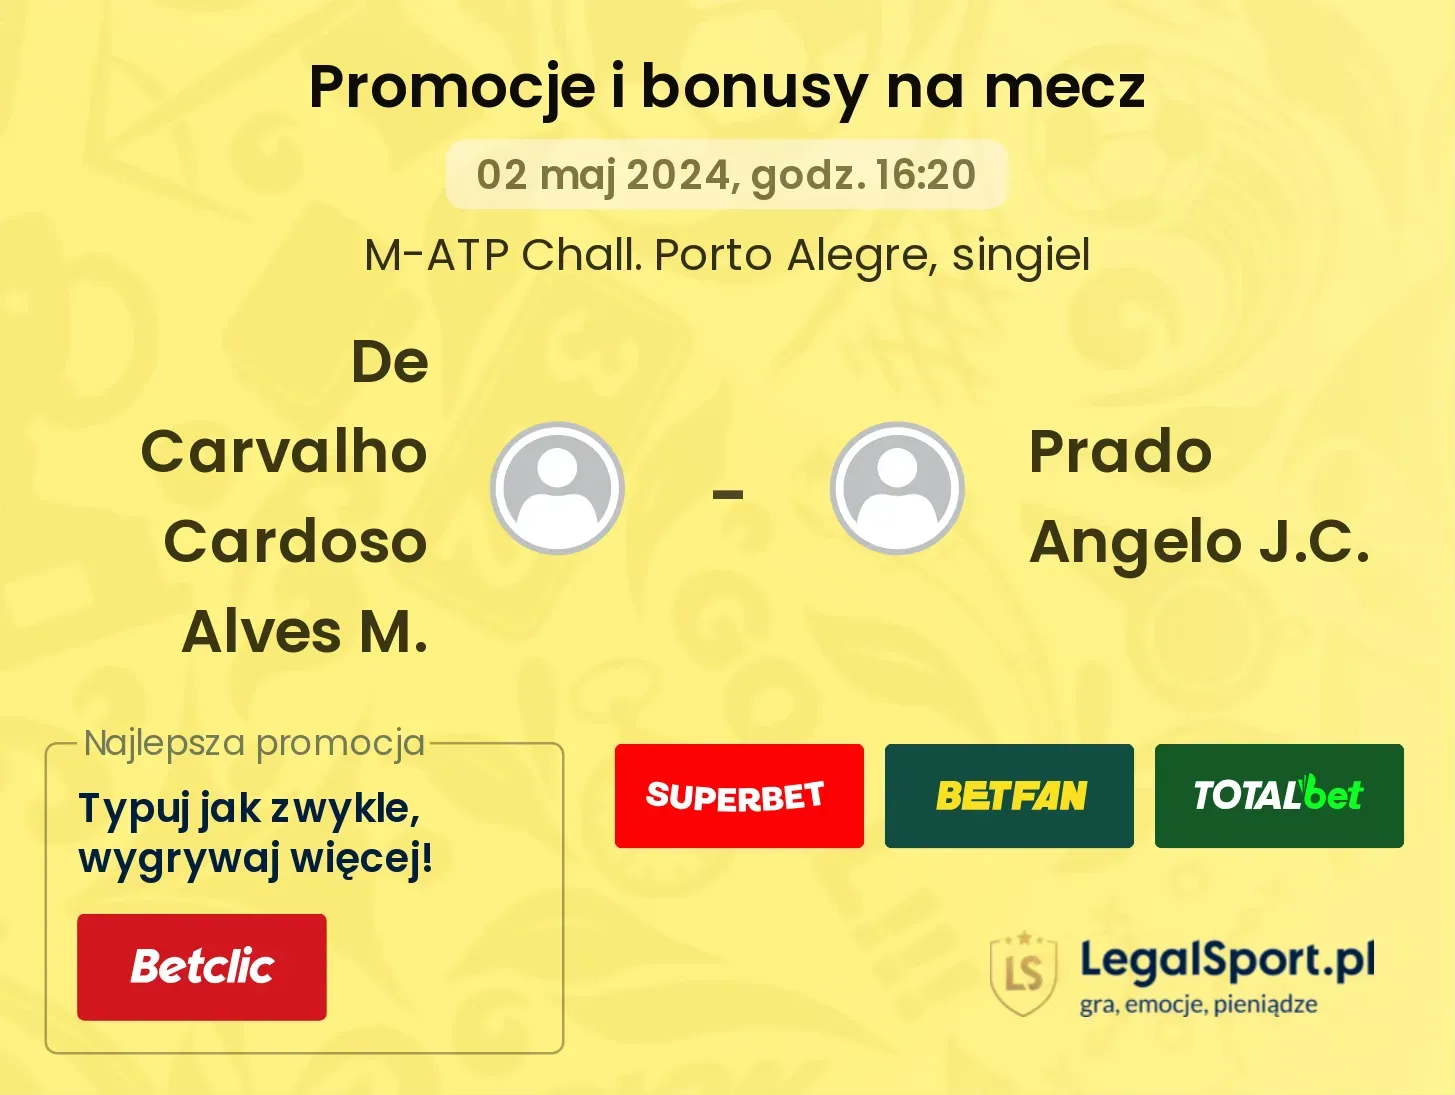 De Carvalho Cardoso Alves M. - Prado Angelo J.C. promocje bonusy na mecz